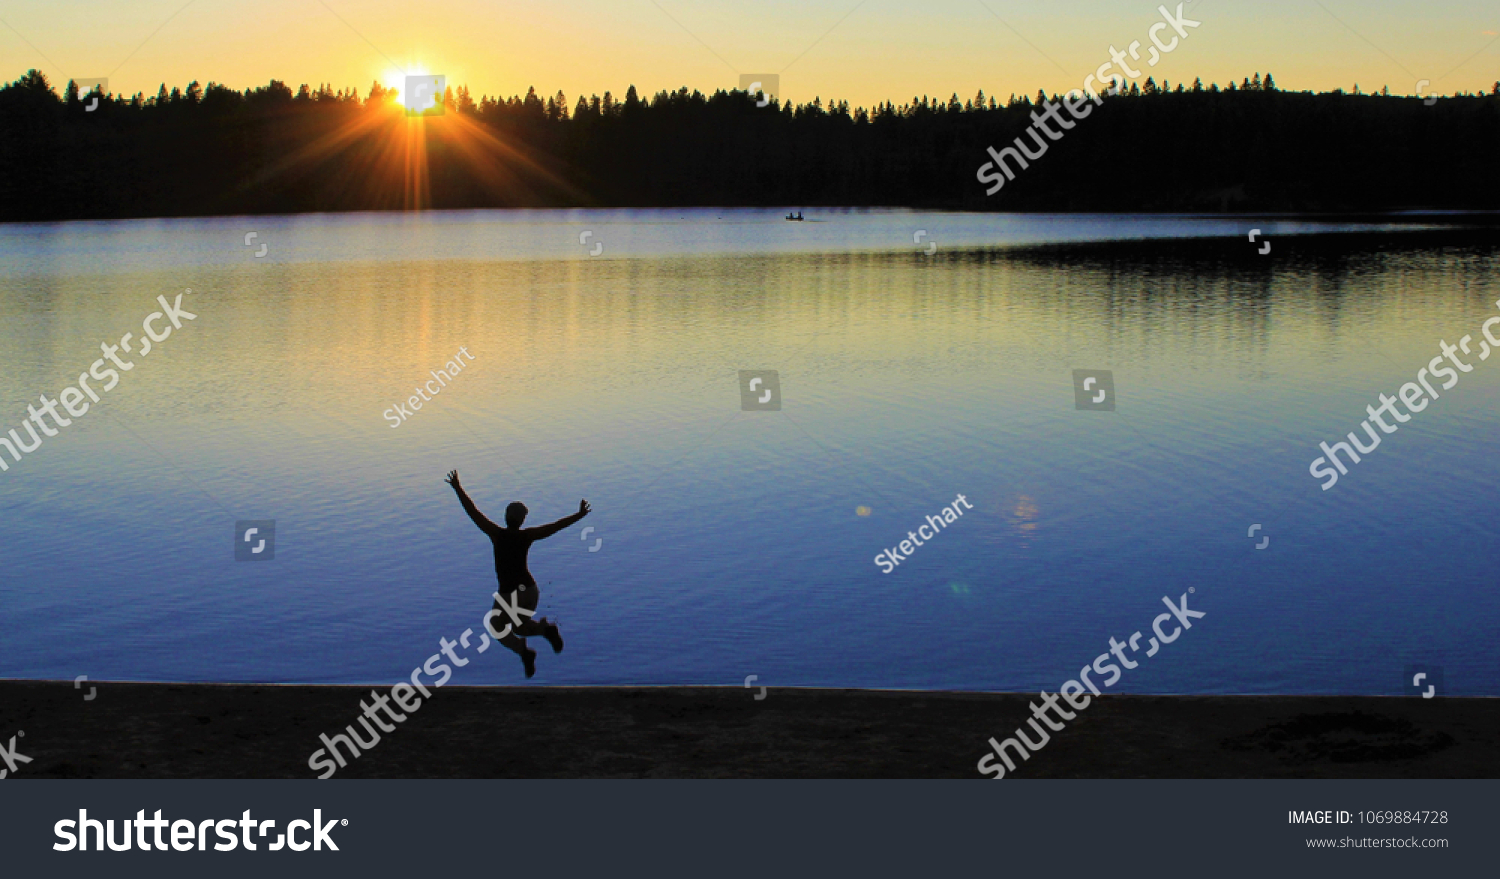 32 Skinny Dipping Lake Kép Stockfotó és Vektorkép Shutterstock 7559